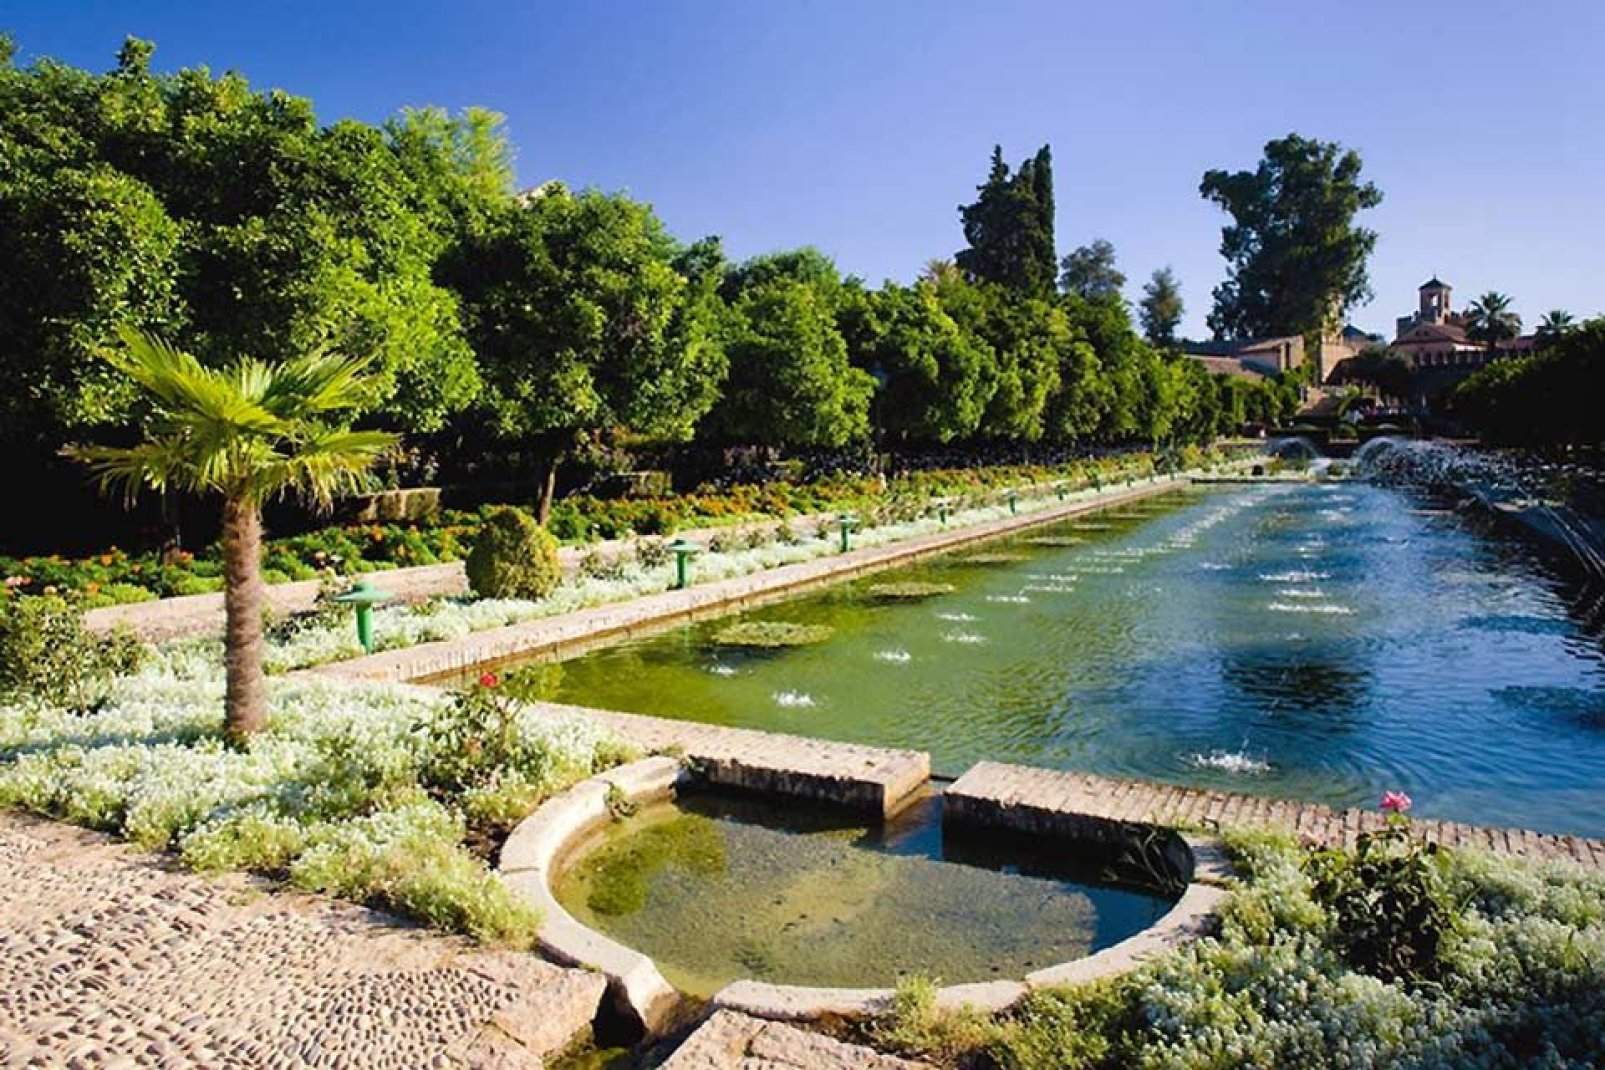 The gardens of the Alcázar de los Reyes Cristianos in Córdoba.